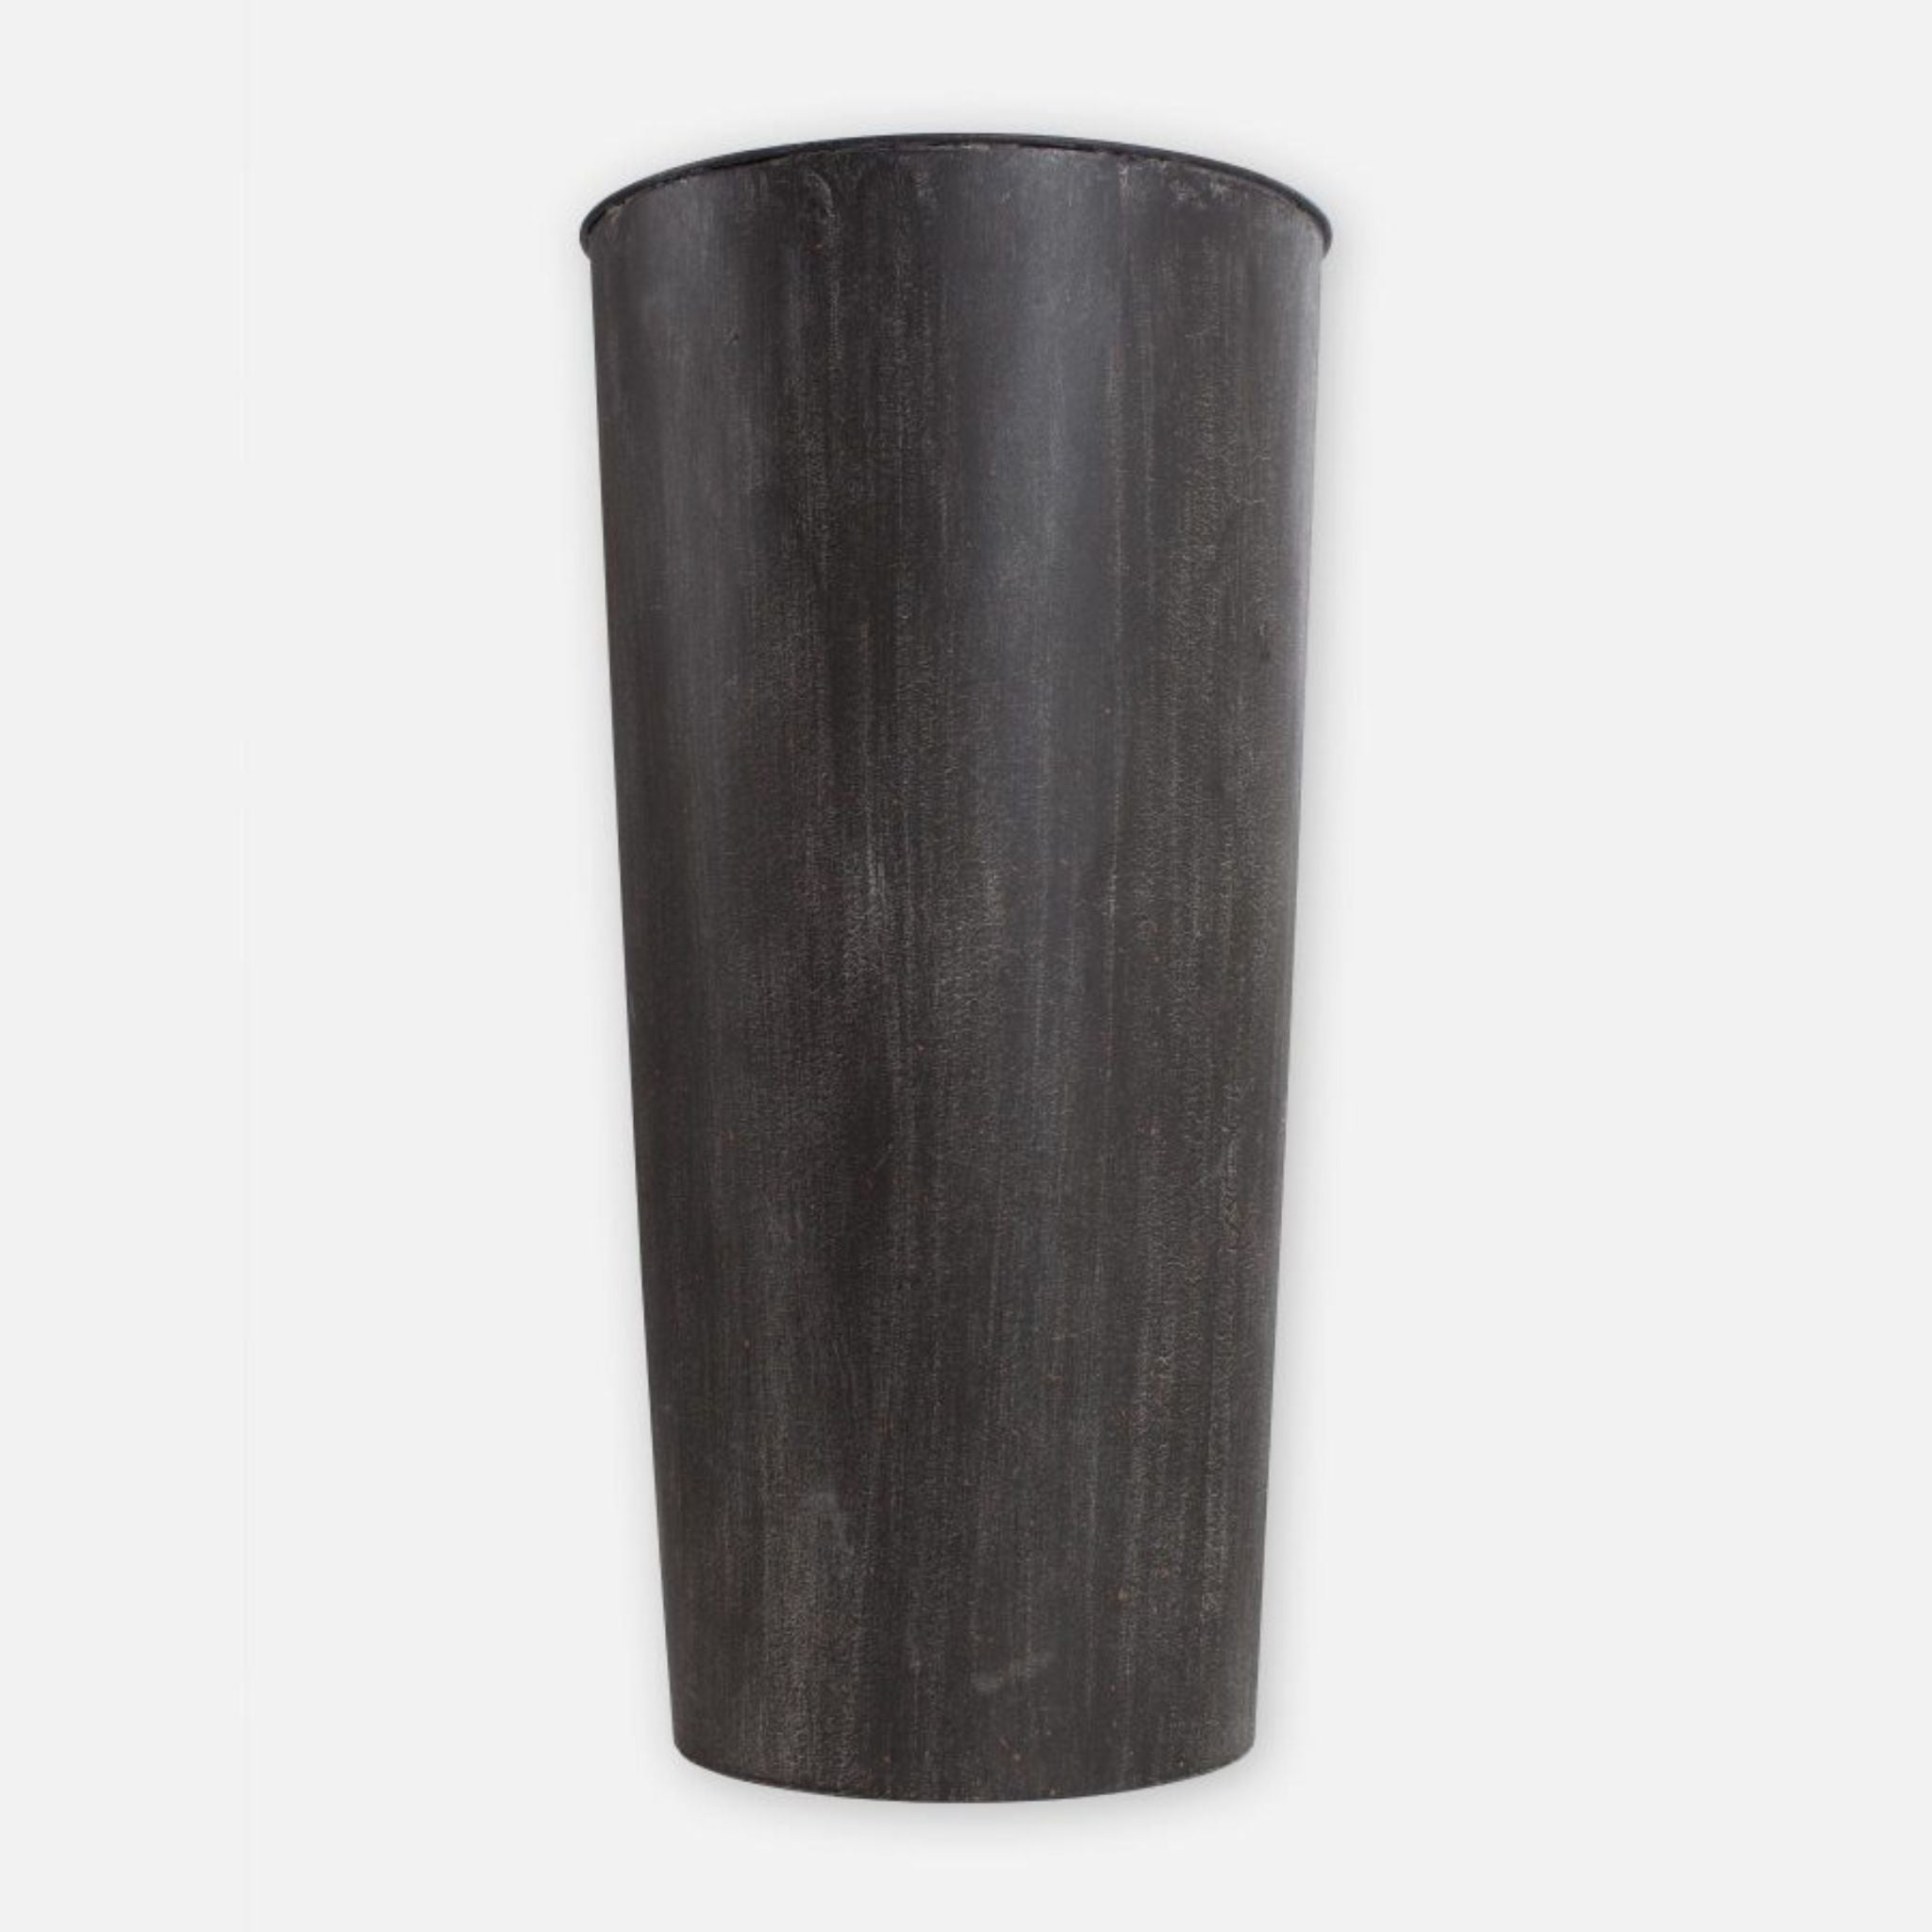 Tall floor vase - dark metal